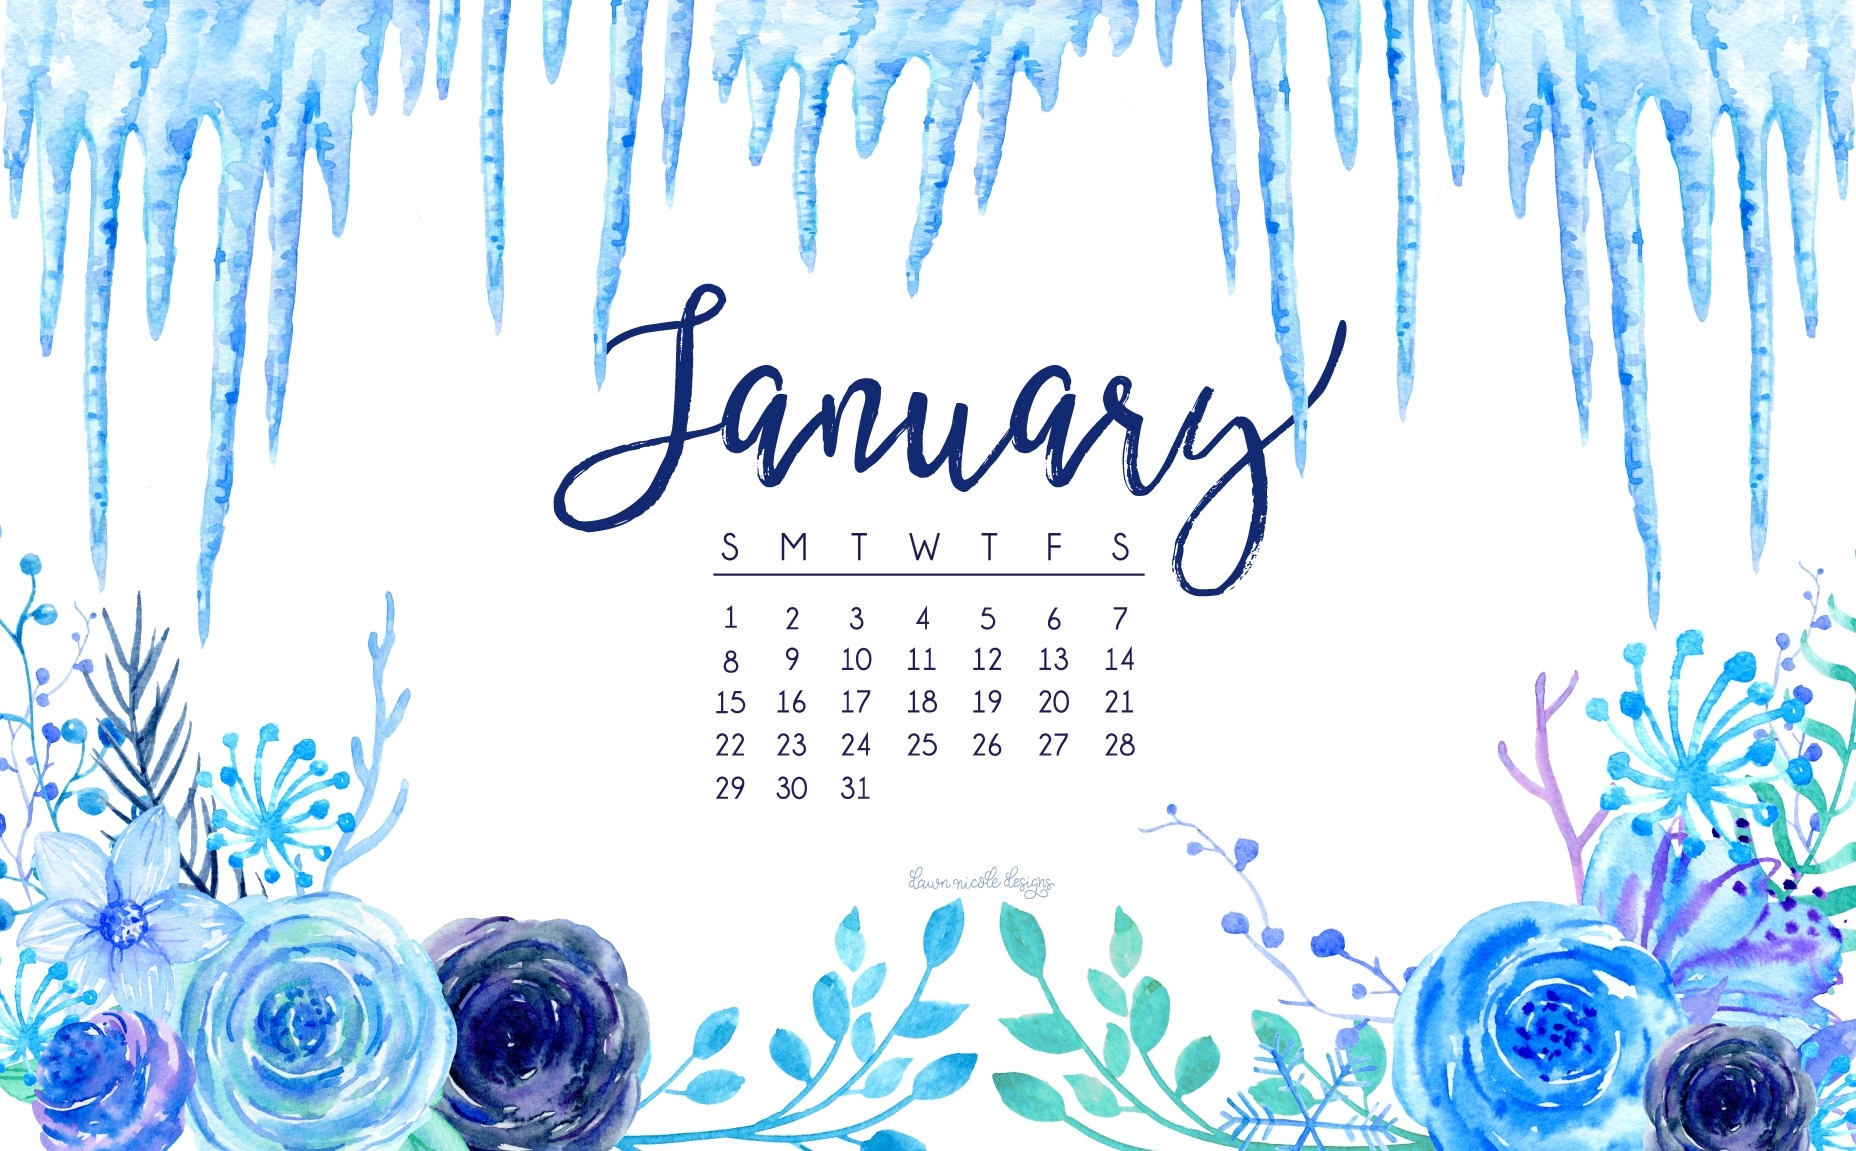 10 Most Popular January 2017 Desktop Calendar Wallpaper FULL HD 1080p For PC Desktop